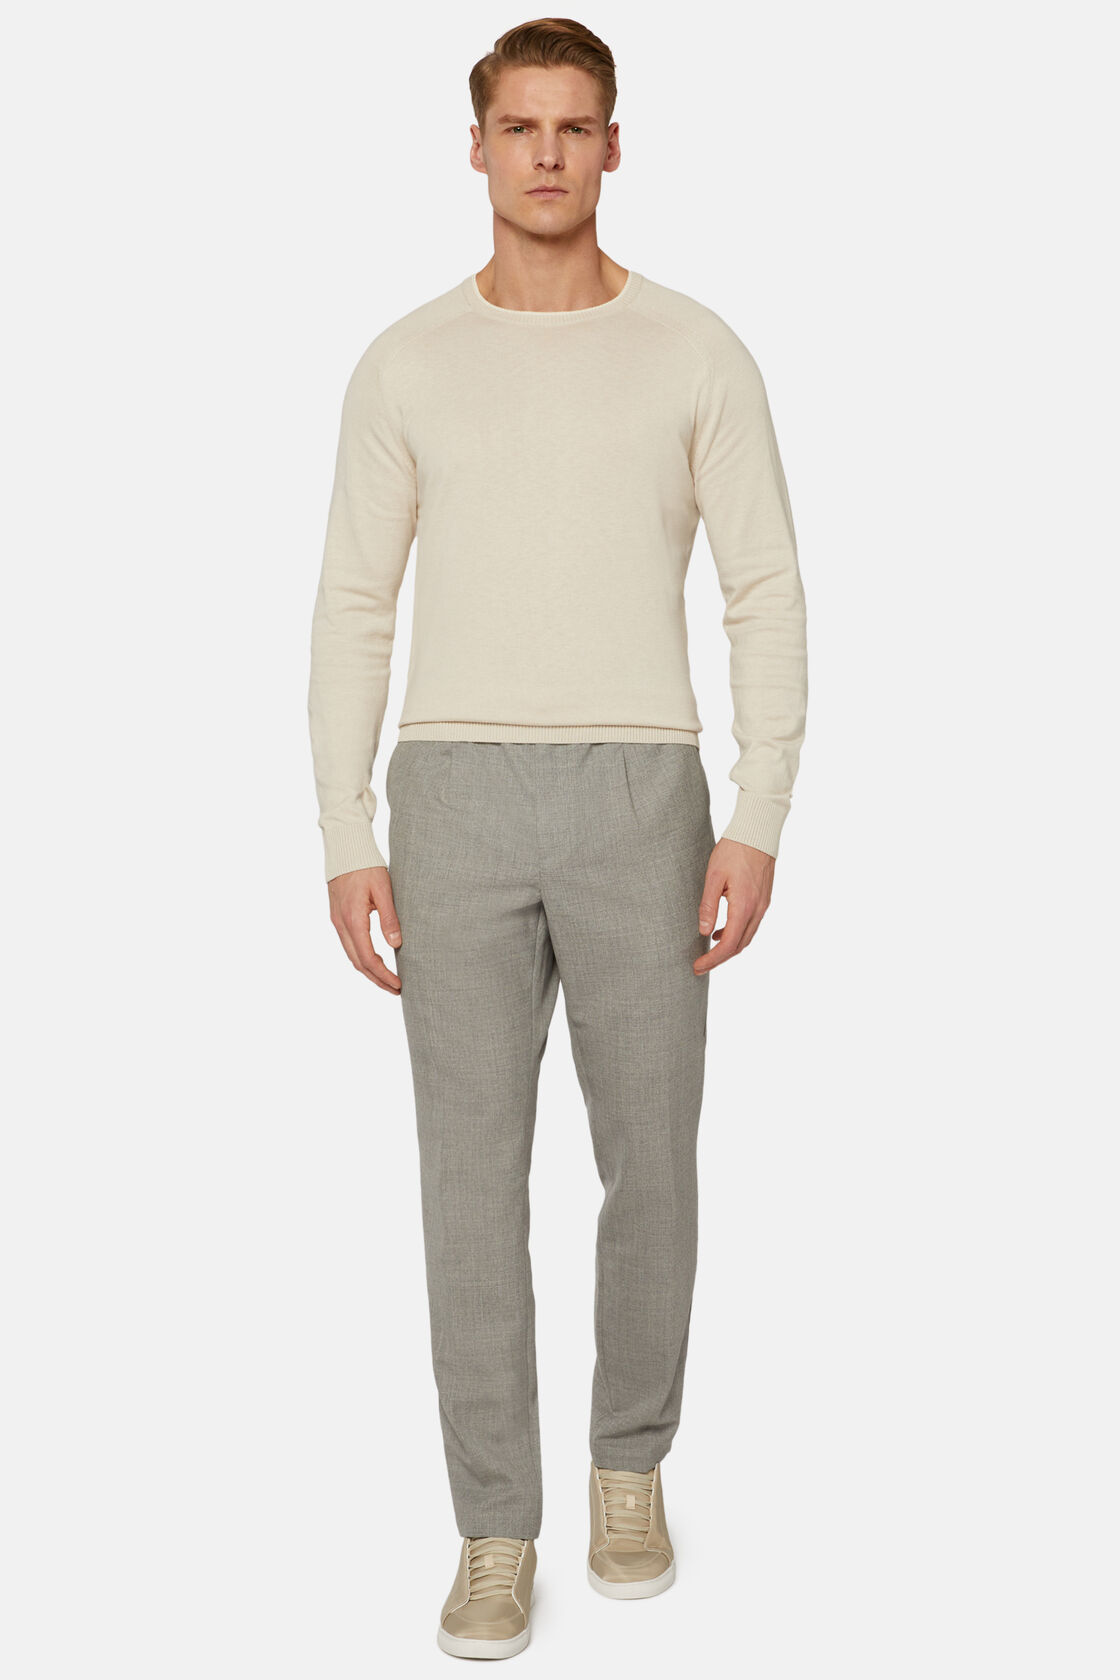 Wool City Trousers, light grey, hi-res